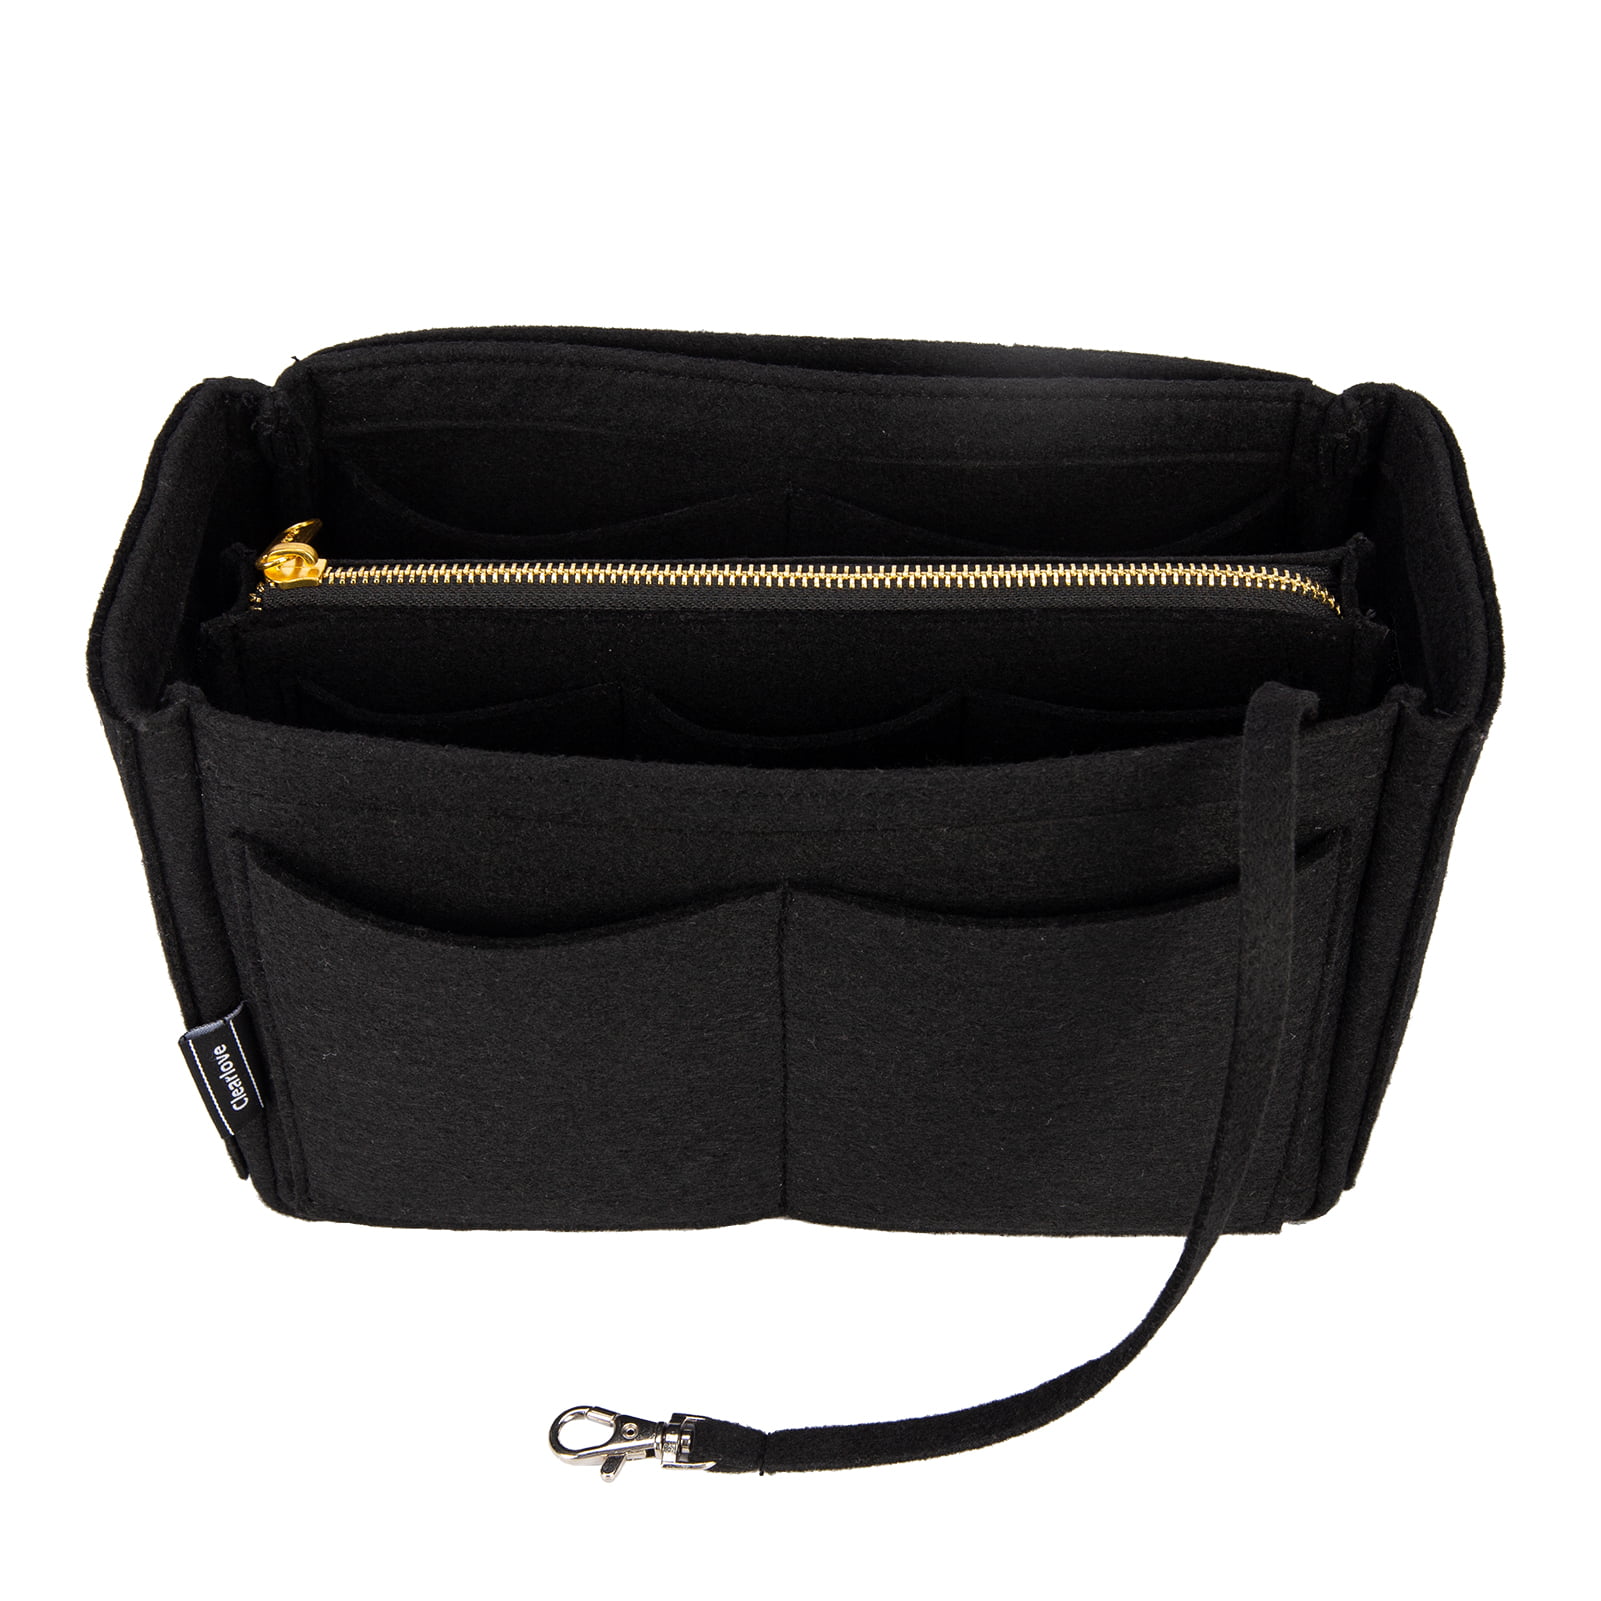 KESOIL Purse Organizer Insert for Handbags, Fit Speedy 25 Neverfull Felt Tote Insert with Base Shaper Zipper Bag in Bag (Beige-Felt, Medium)